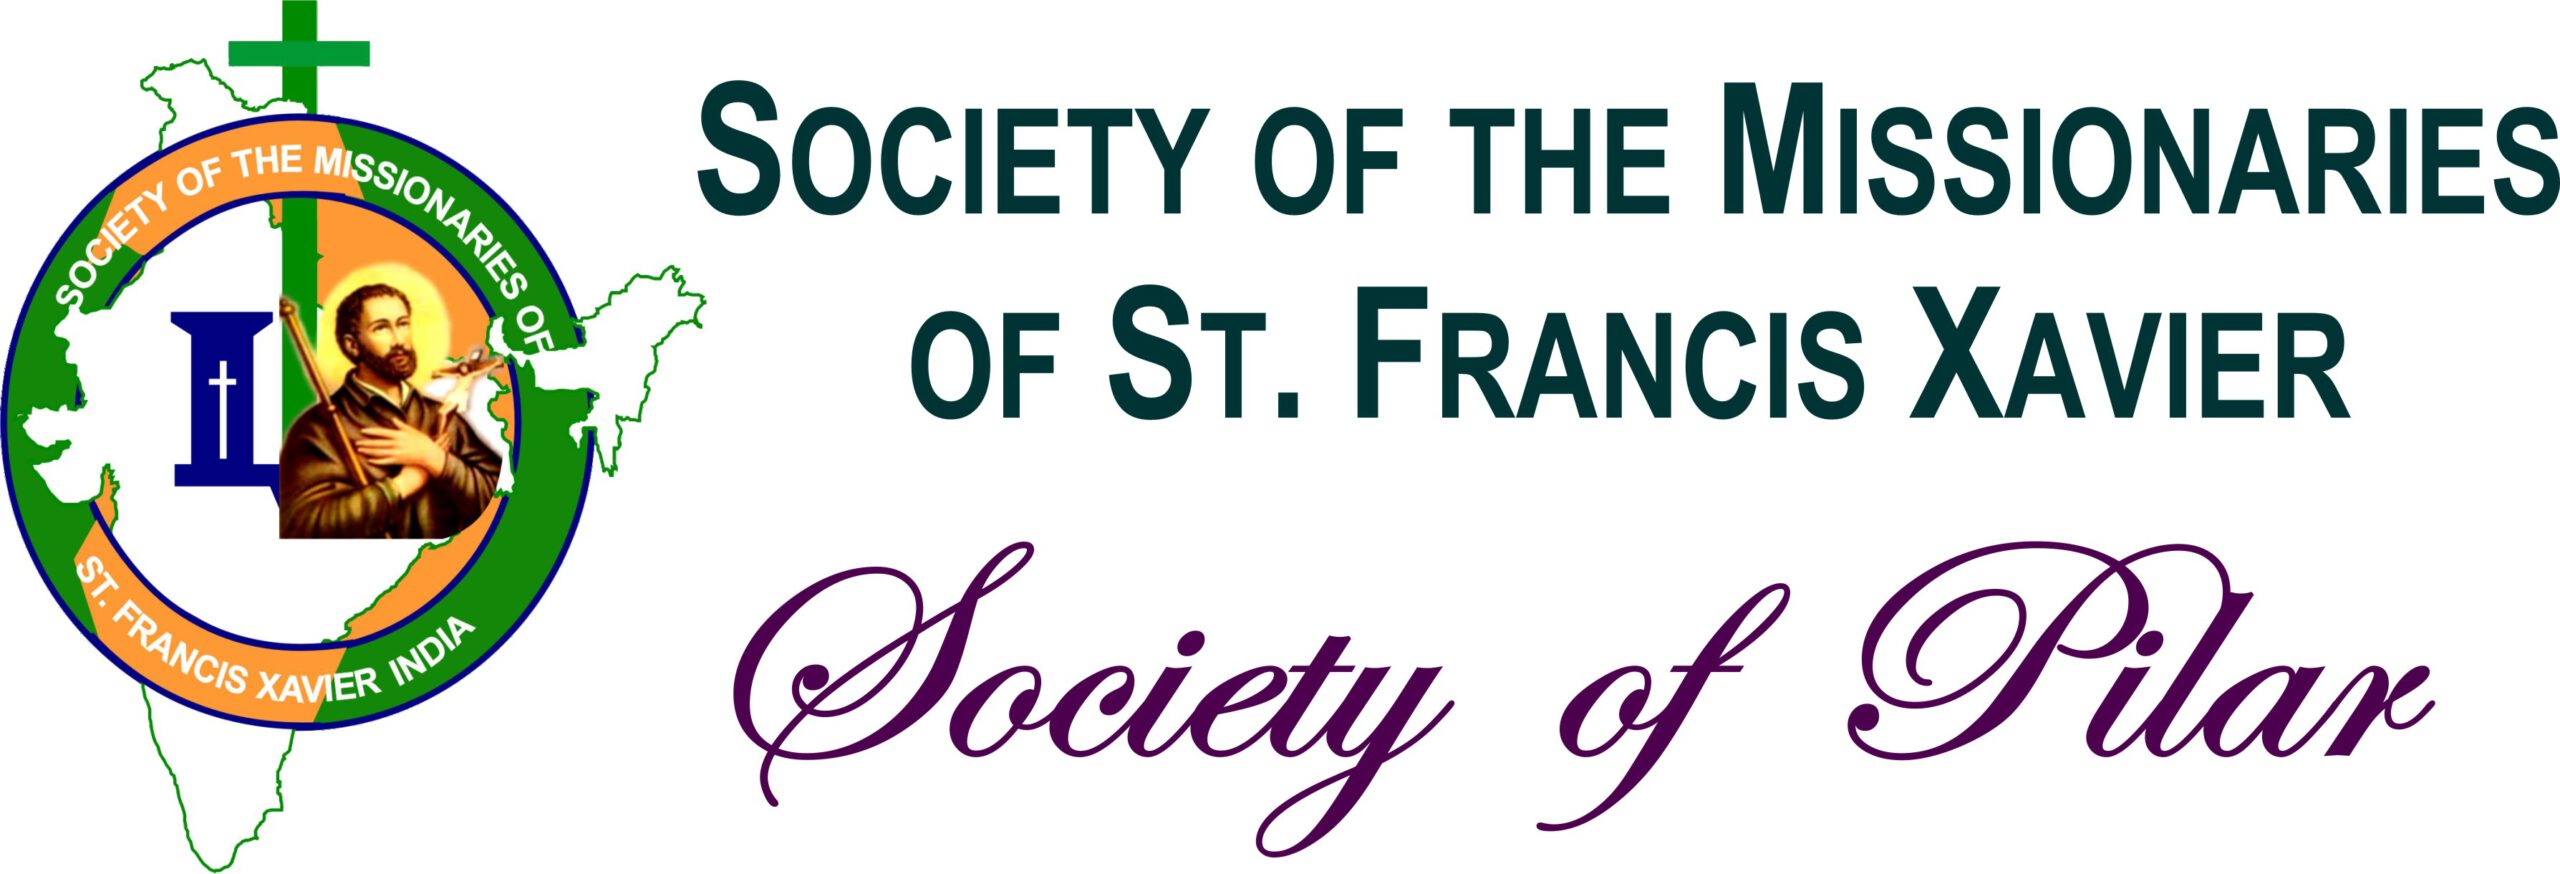 Society Of Missionaries Of St. Francis Xavier | Society Of Pilar